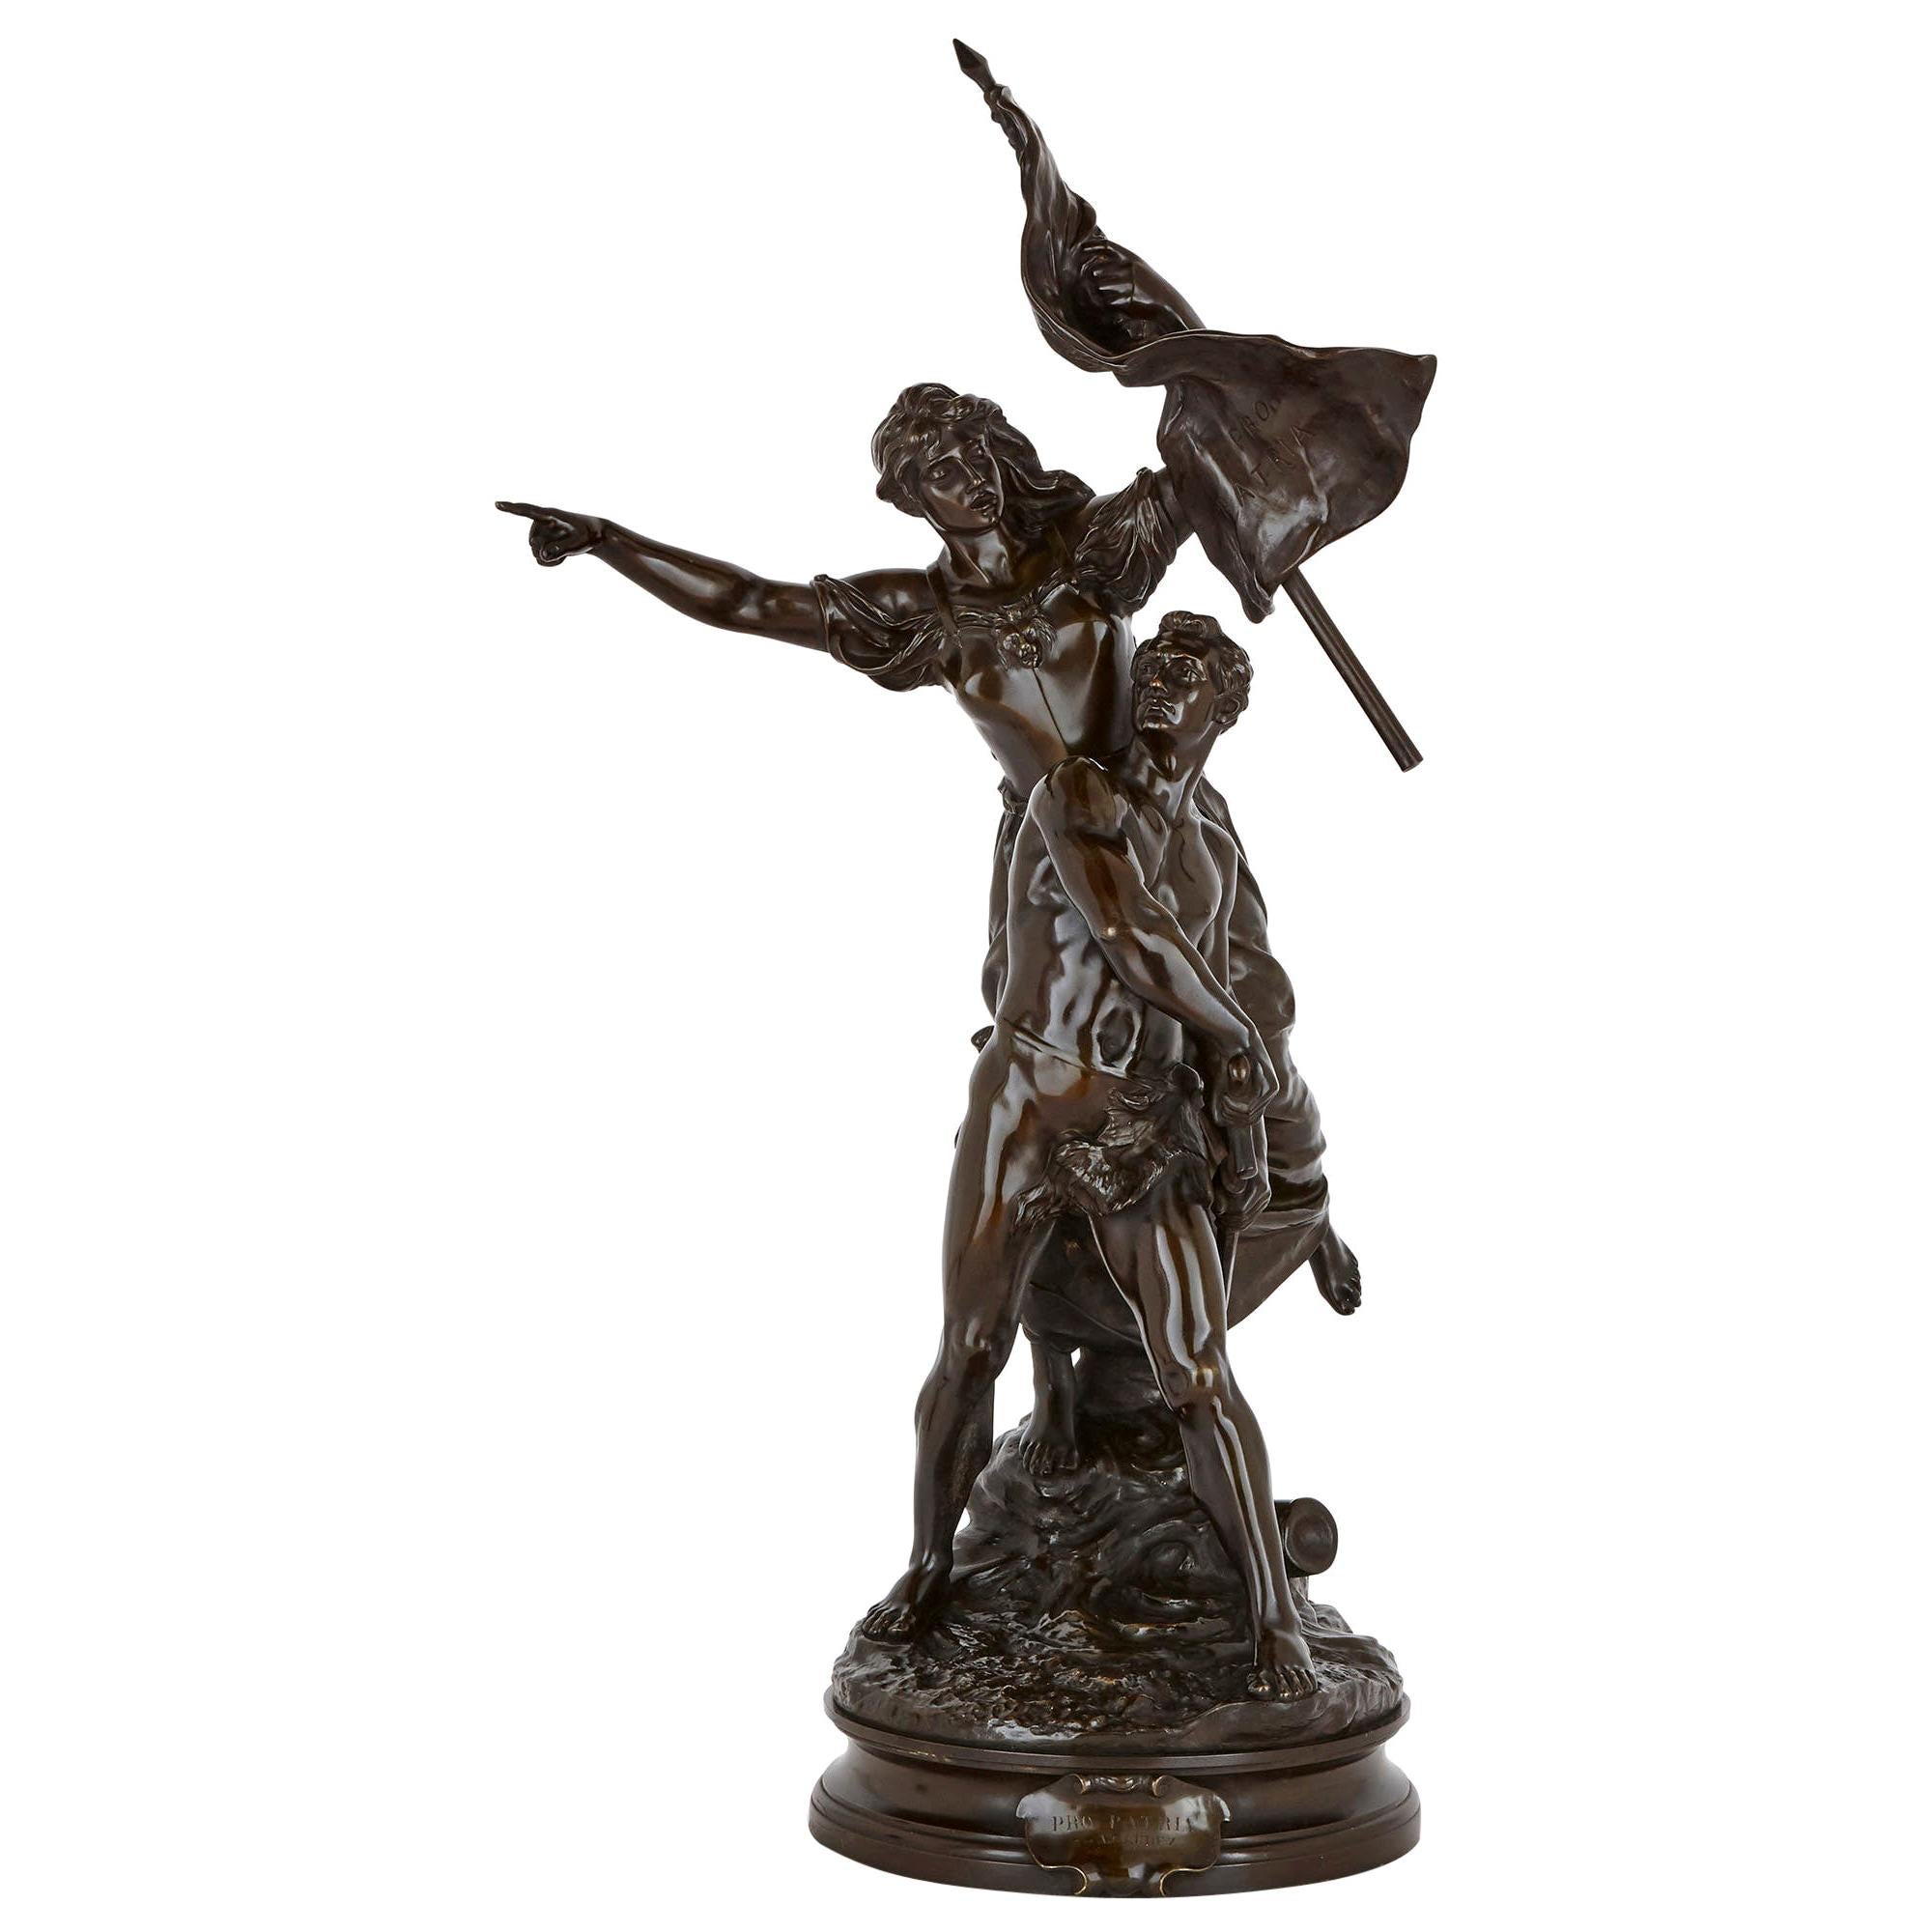 Antique Patinated Bronze Sculpture by Gaudez